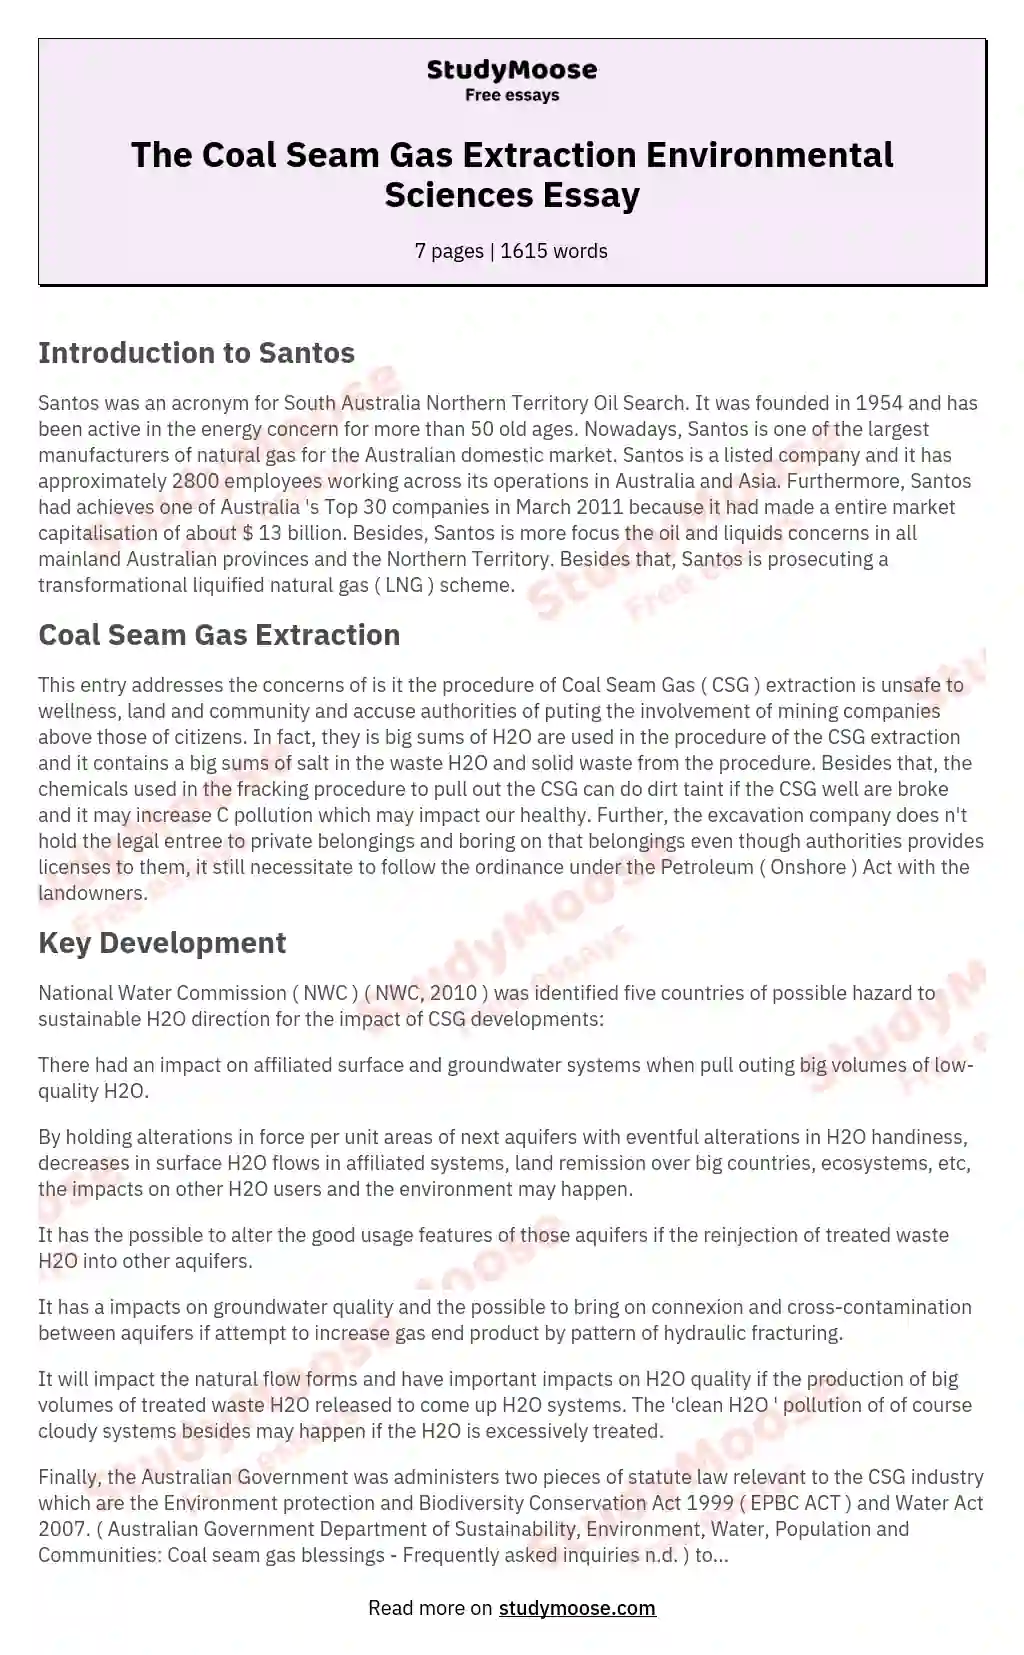 The Coal Seam Gas Extraction Environmental Sciences Essay